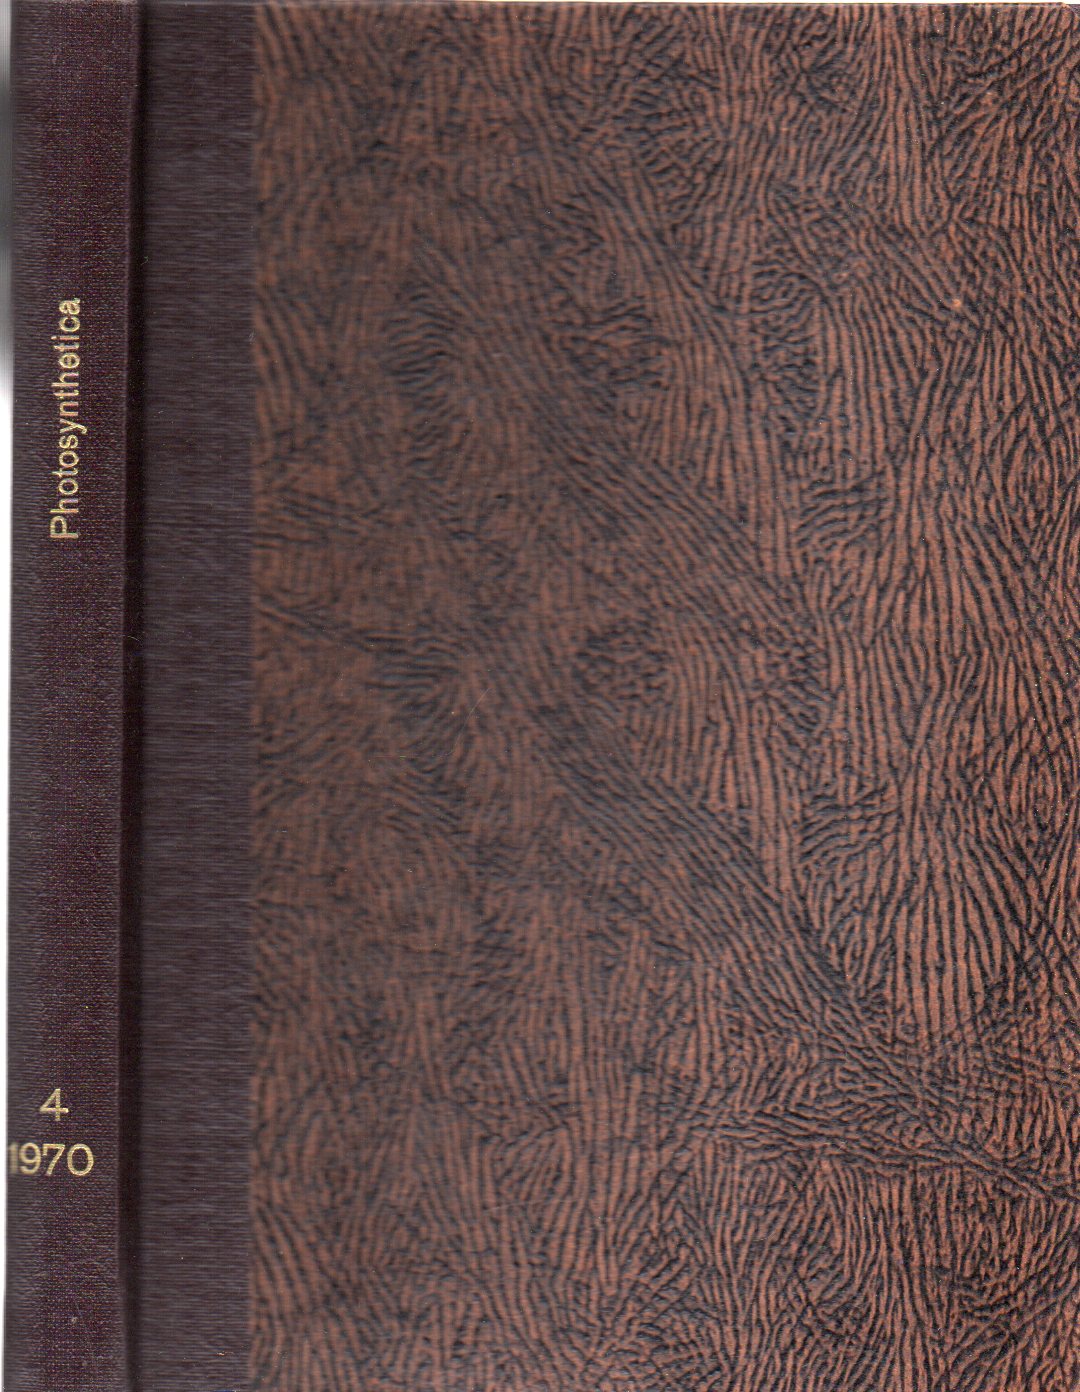 Photosynthetica  Photosynthetica Volume 4. 1970 